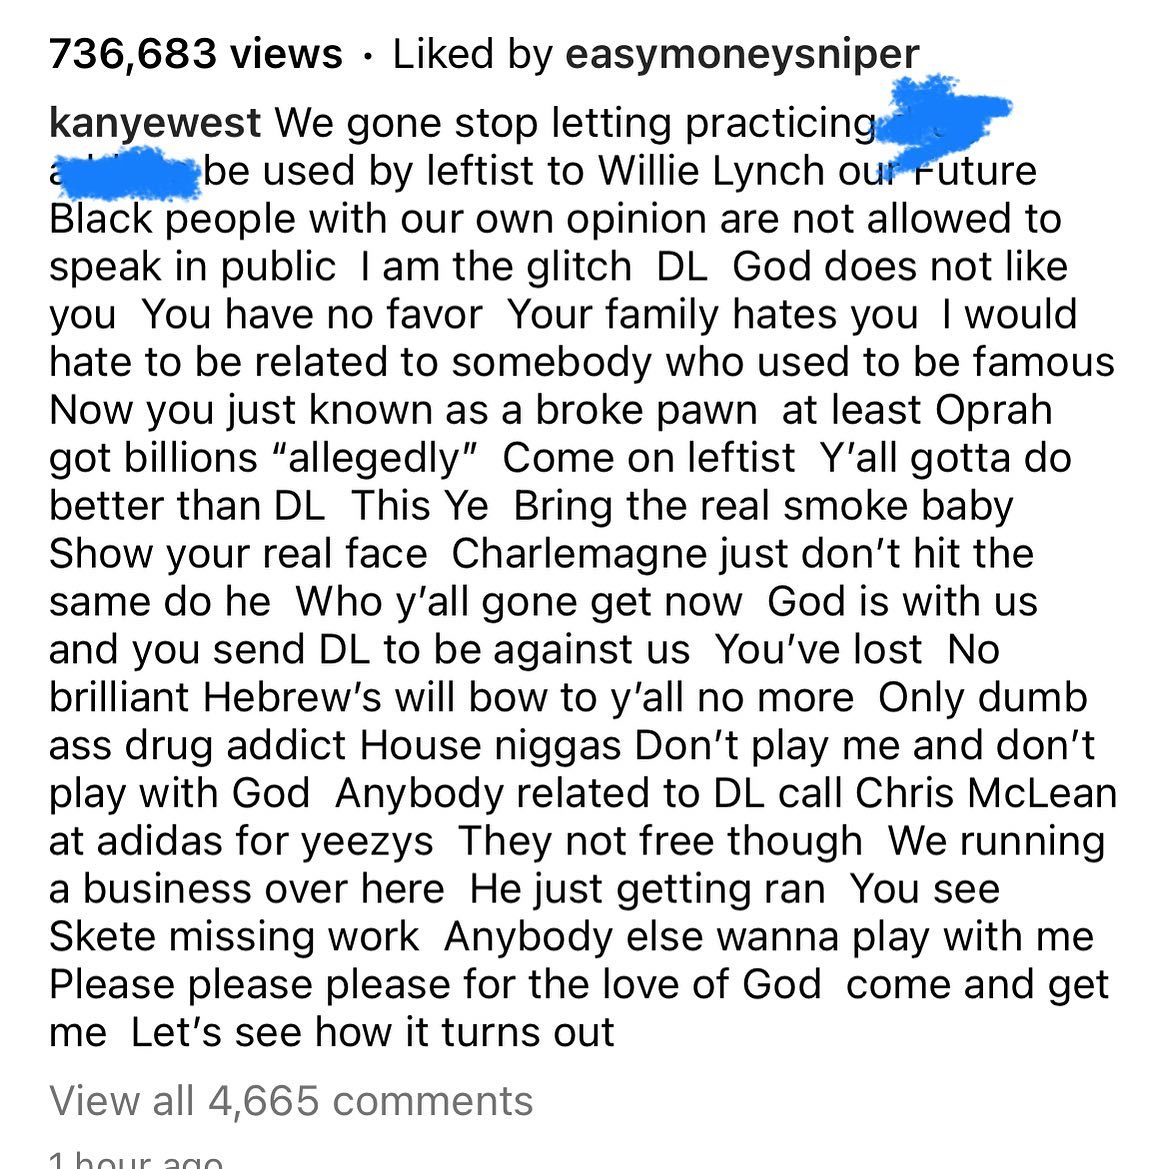 Kanye West Hughley comment